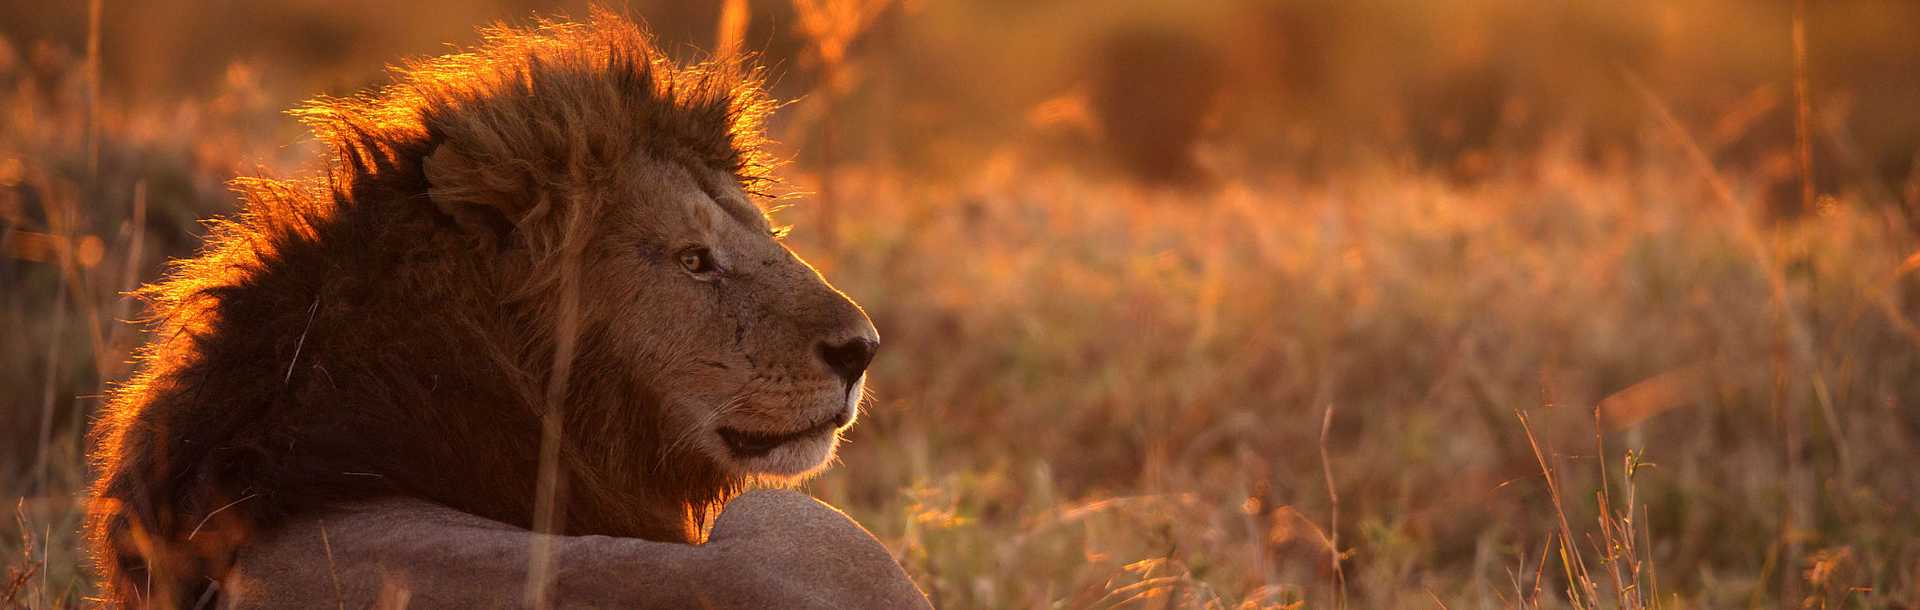 Lion resting in Masai Mara, Kenya